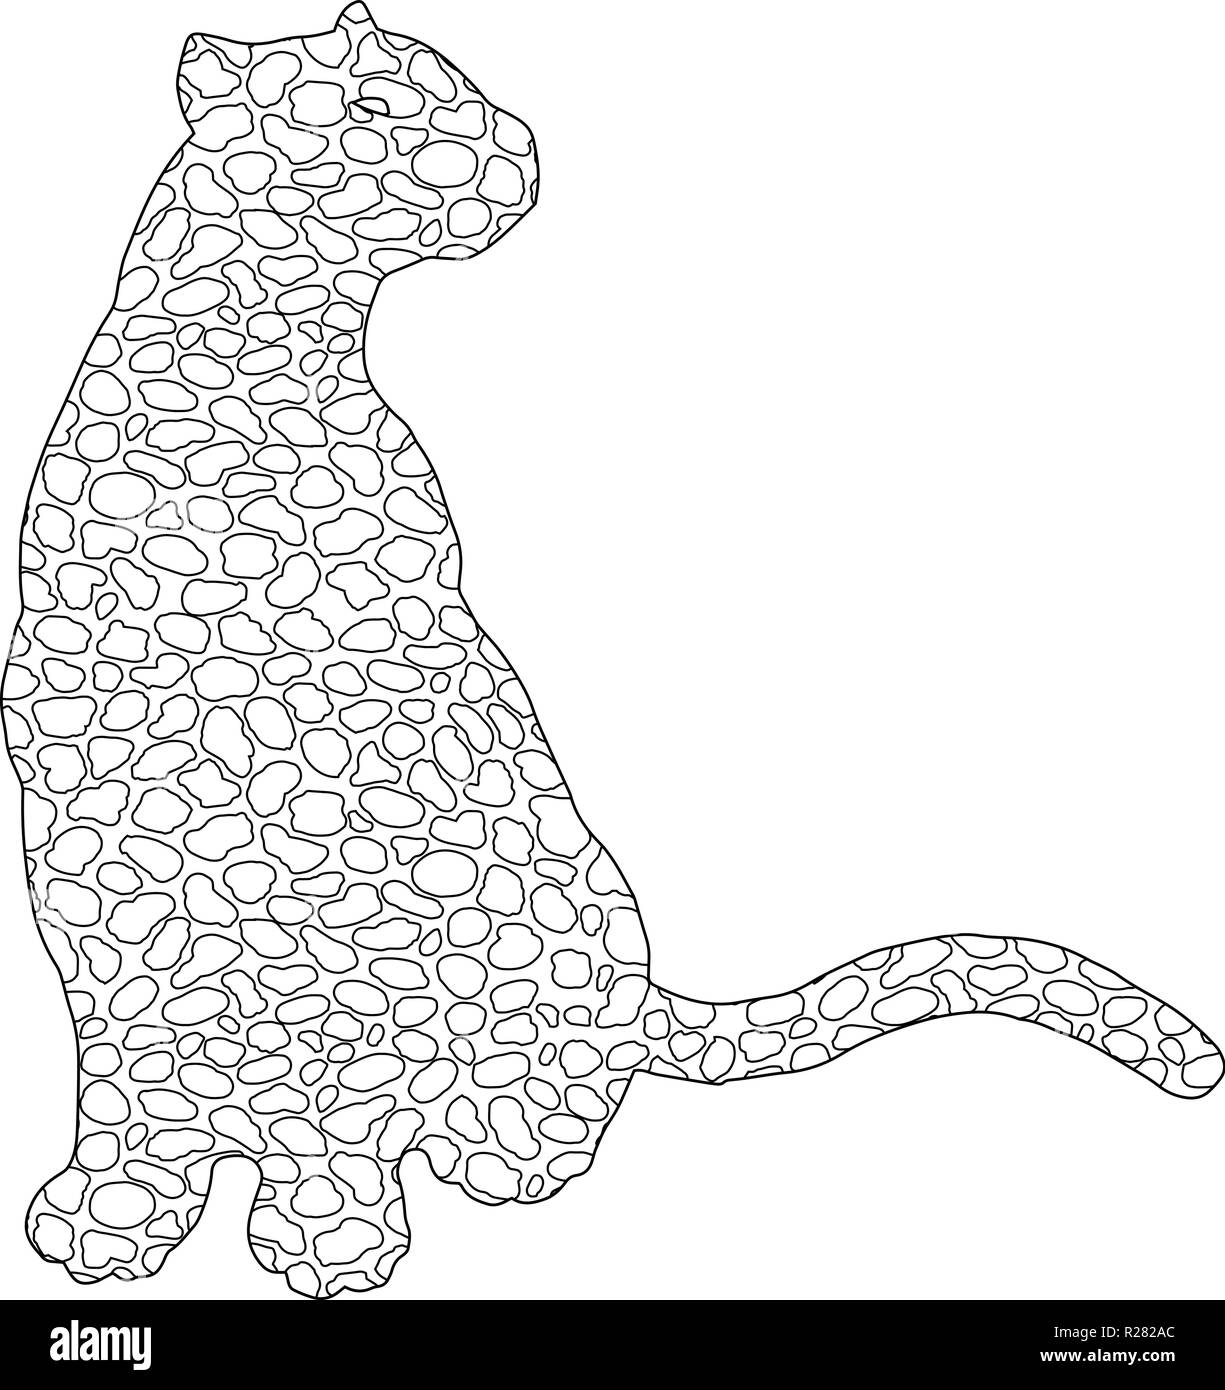 Drawn jaguar, leopard, wild cat, panther doodle outline silhouette Stock Vector